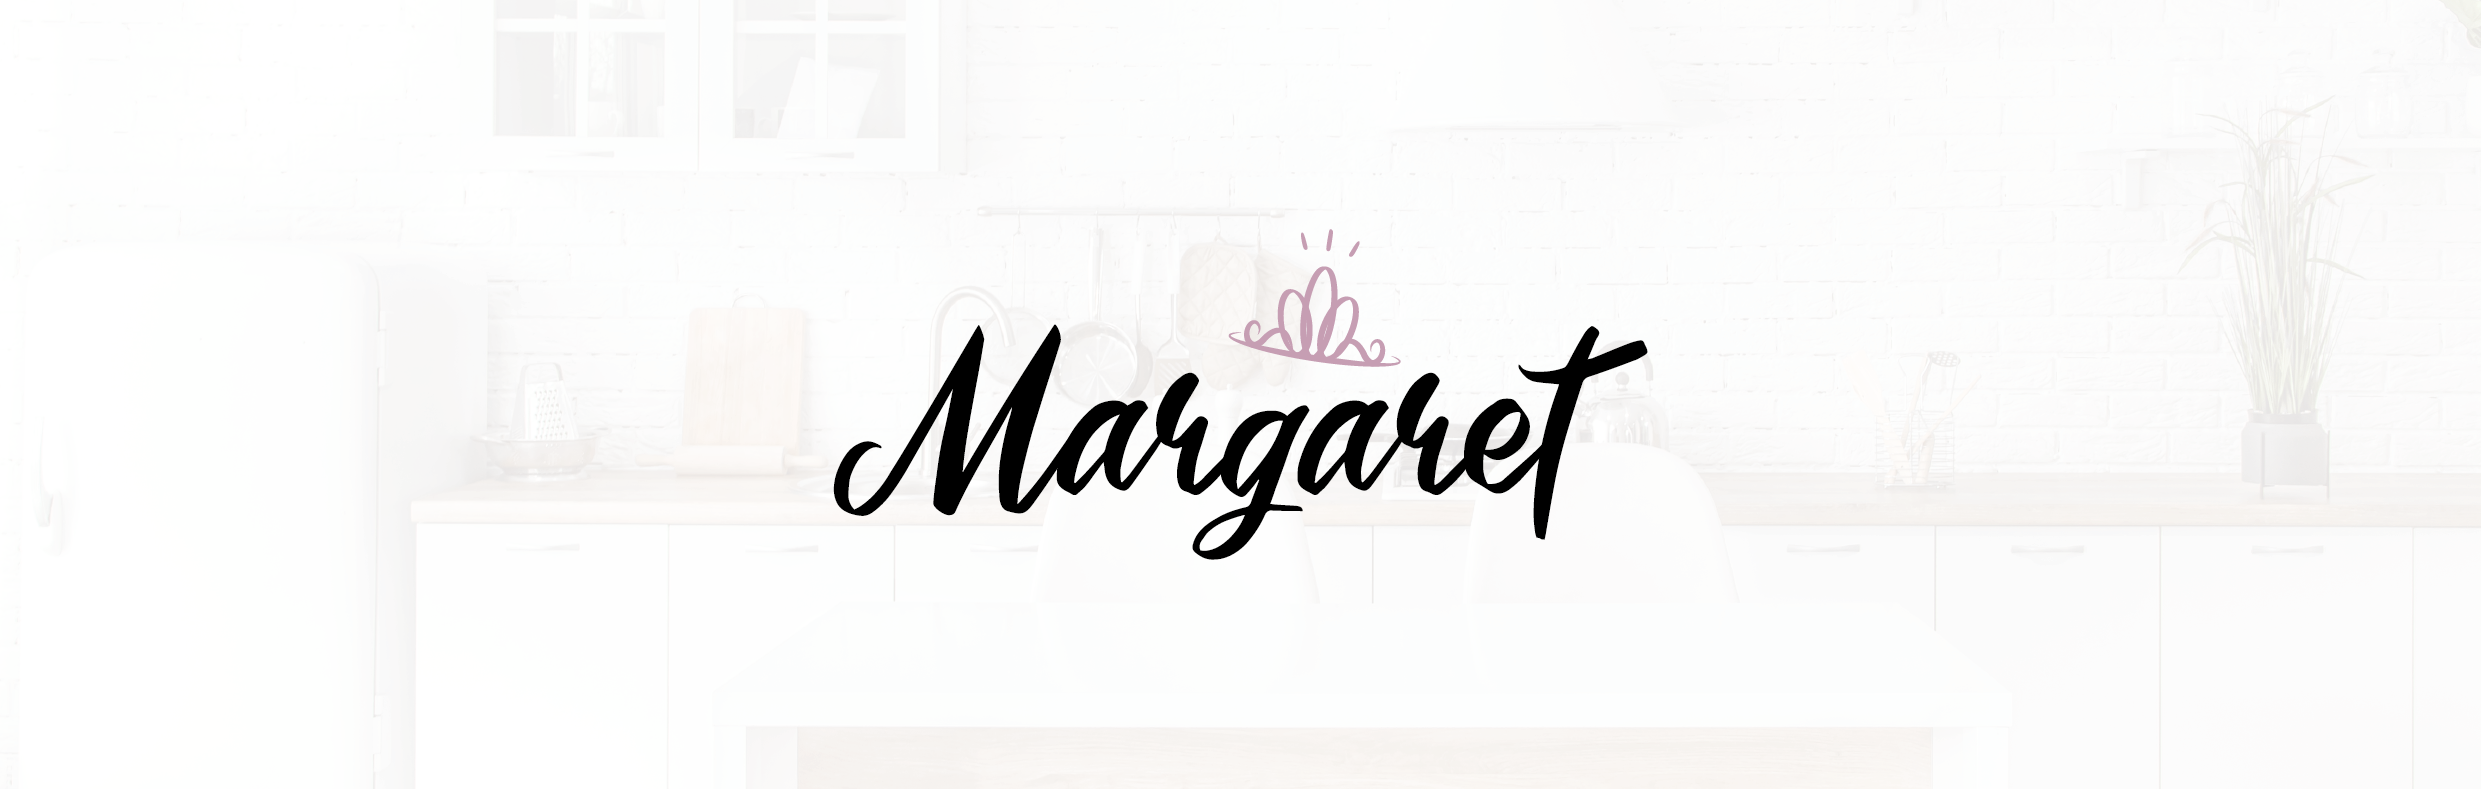 Conciergerie Margaret Annecy logo